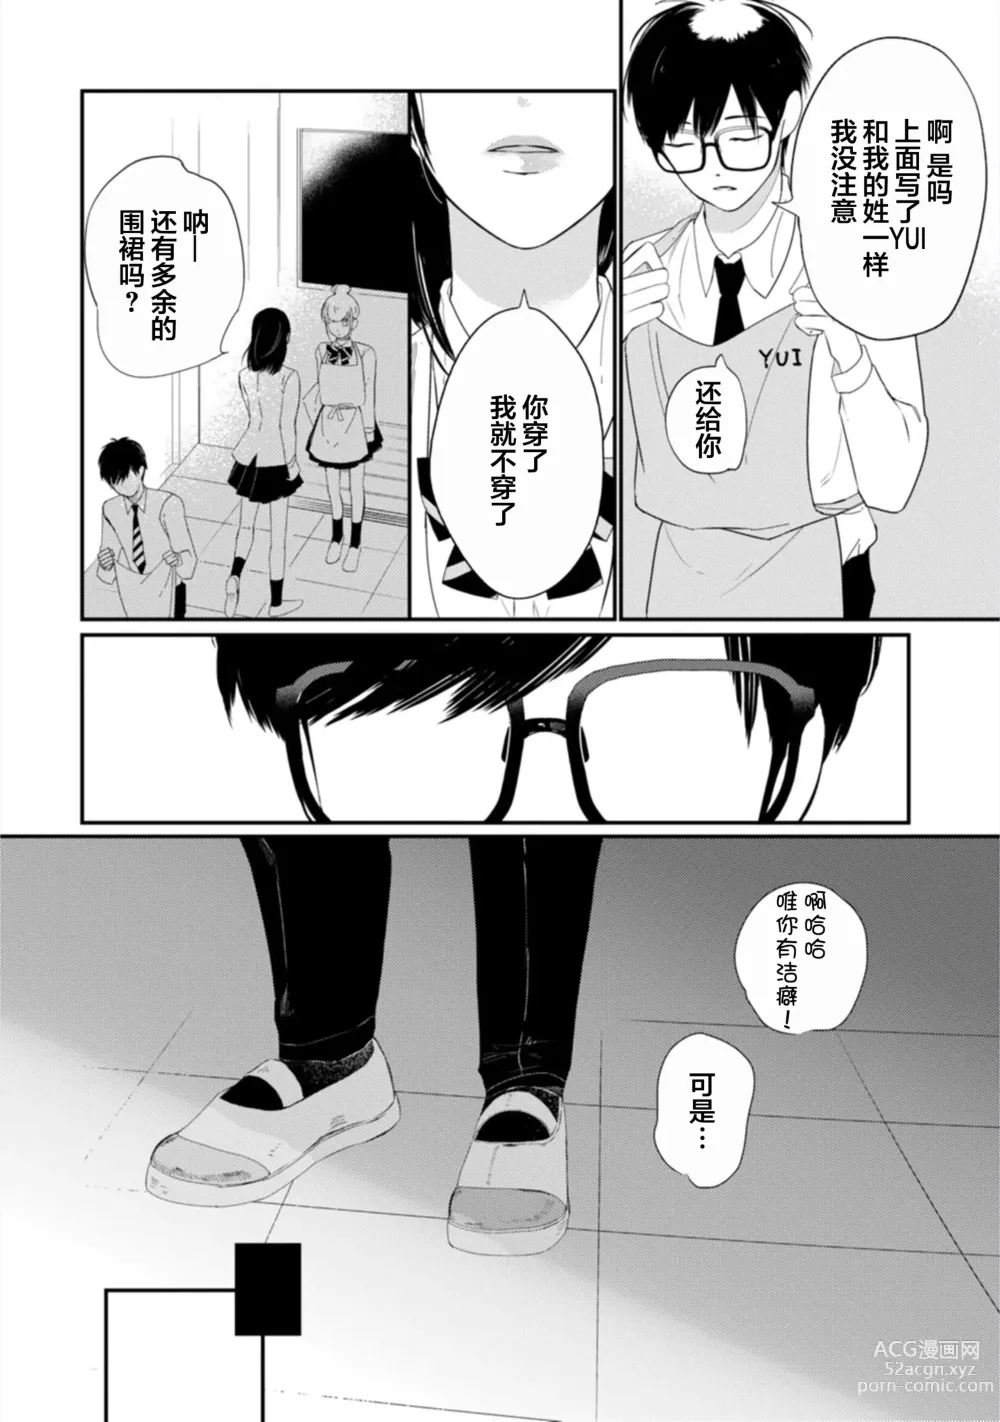 Page 16 of manga 渴望褪下制服